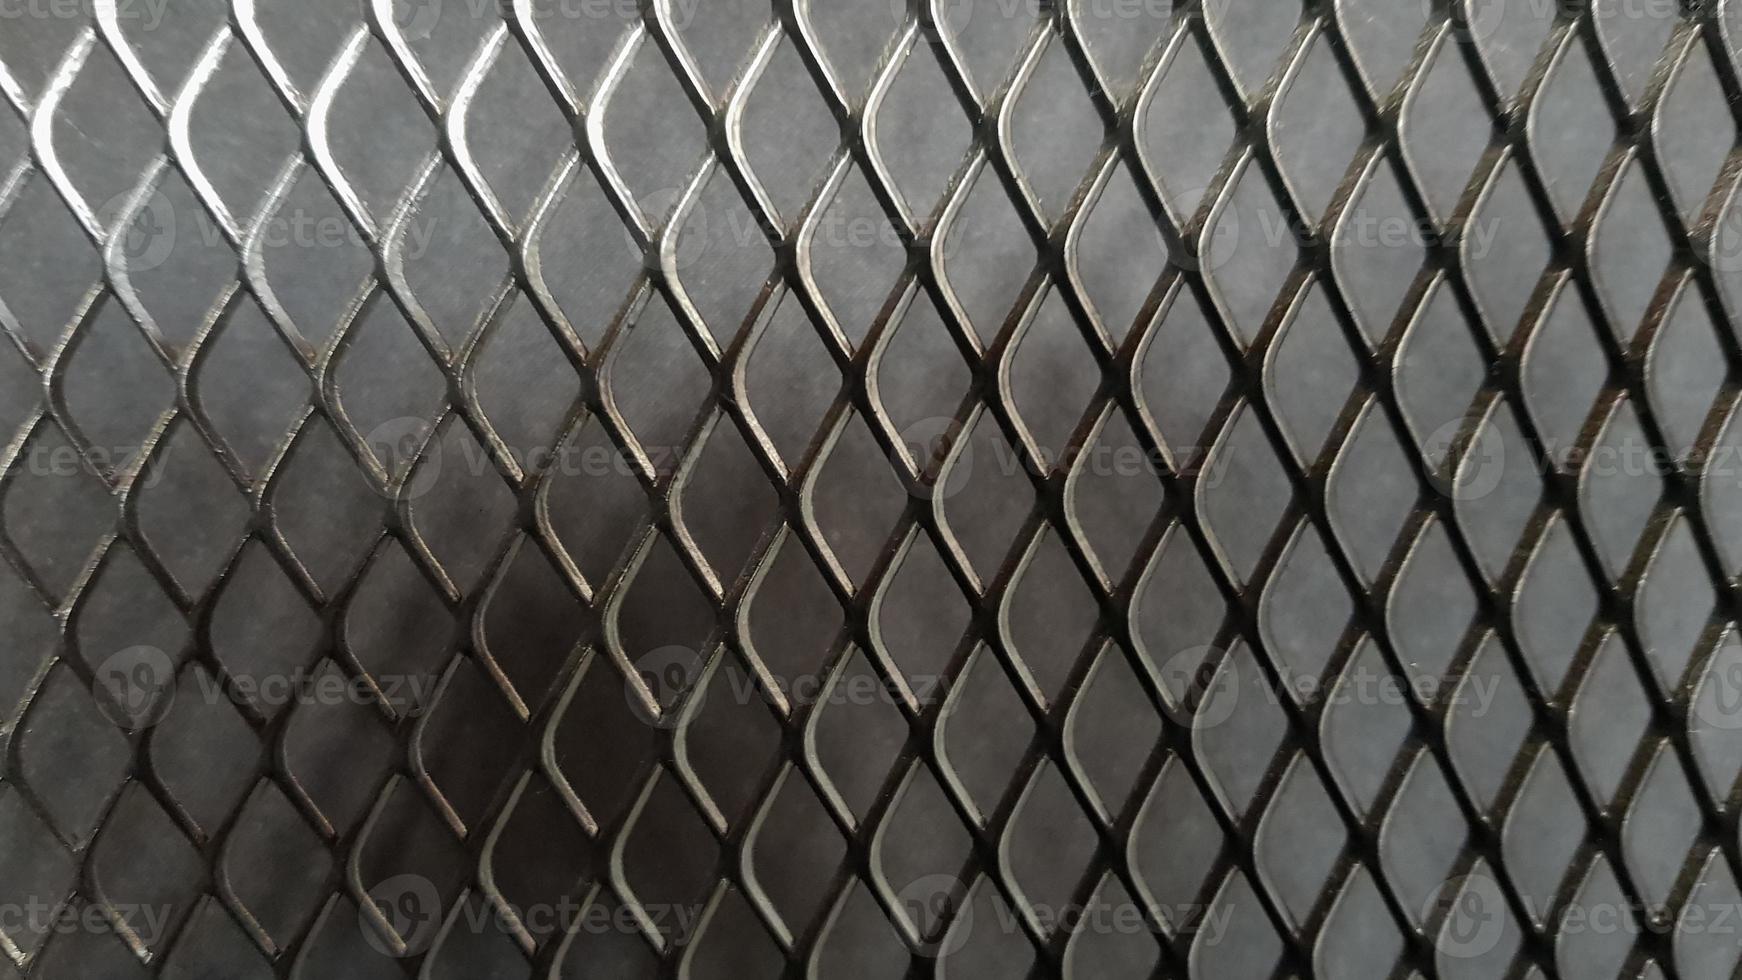 https://static.vecteezy.com/ti/fotos-kostenlos/p1/4537283-metal-mesh-seamless-pattern-black-metal-mesh-texture-on-a-black-background-bulletin-board-for-text-and-message-design-rhombus-shape-foto.jpg